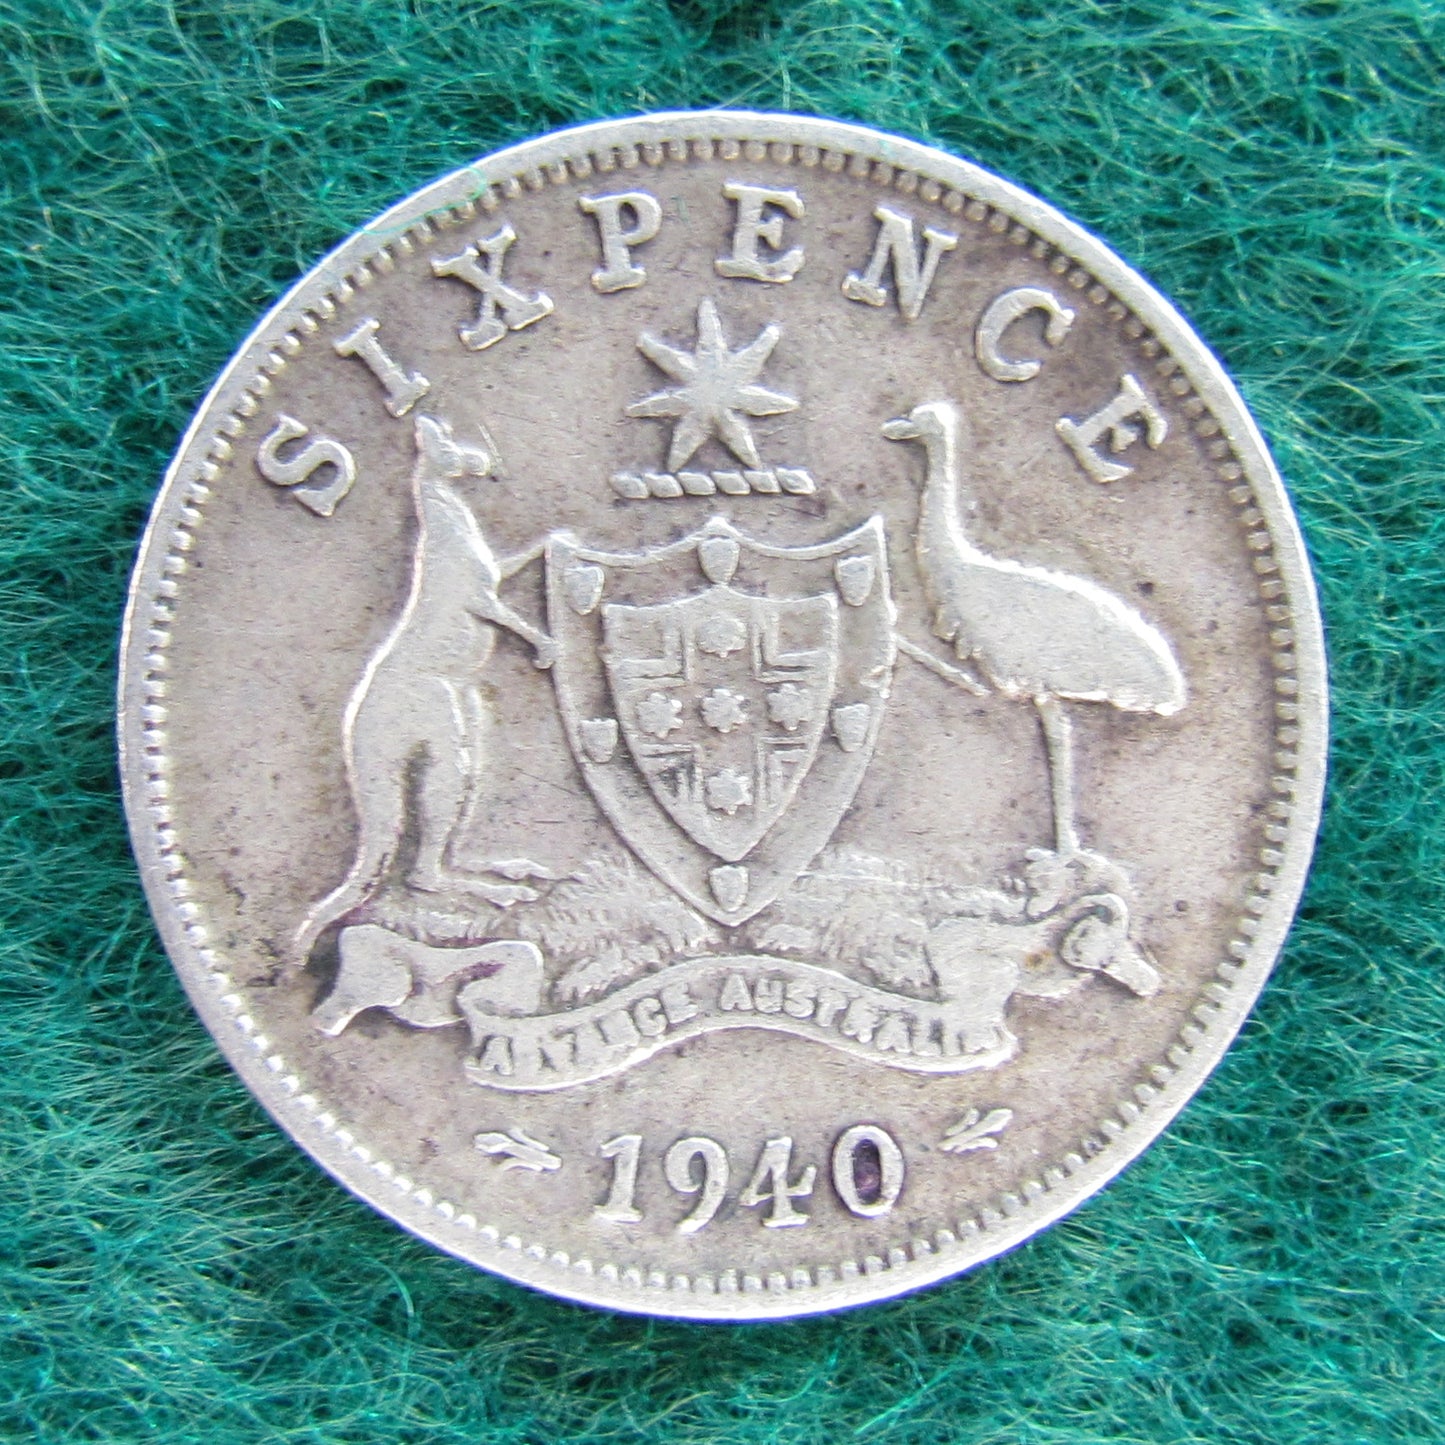 Australian 1940 6d Sixpence King George VI Coin - Circulated